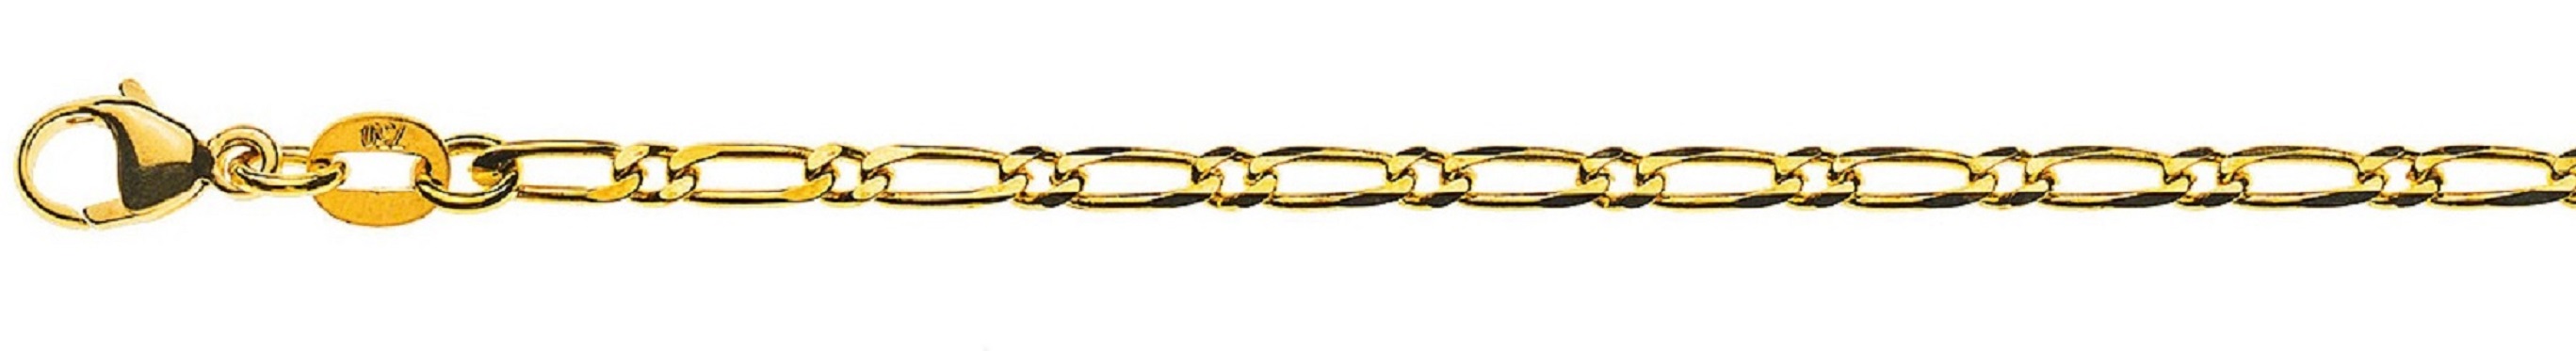 AURONOS Prestige Necklace yellow gold 18K Figaro chain 42cm 2.3mm